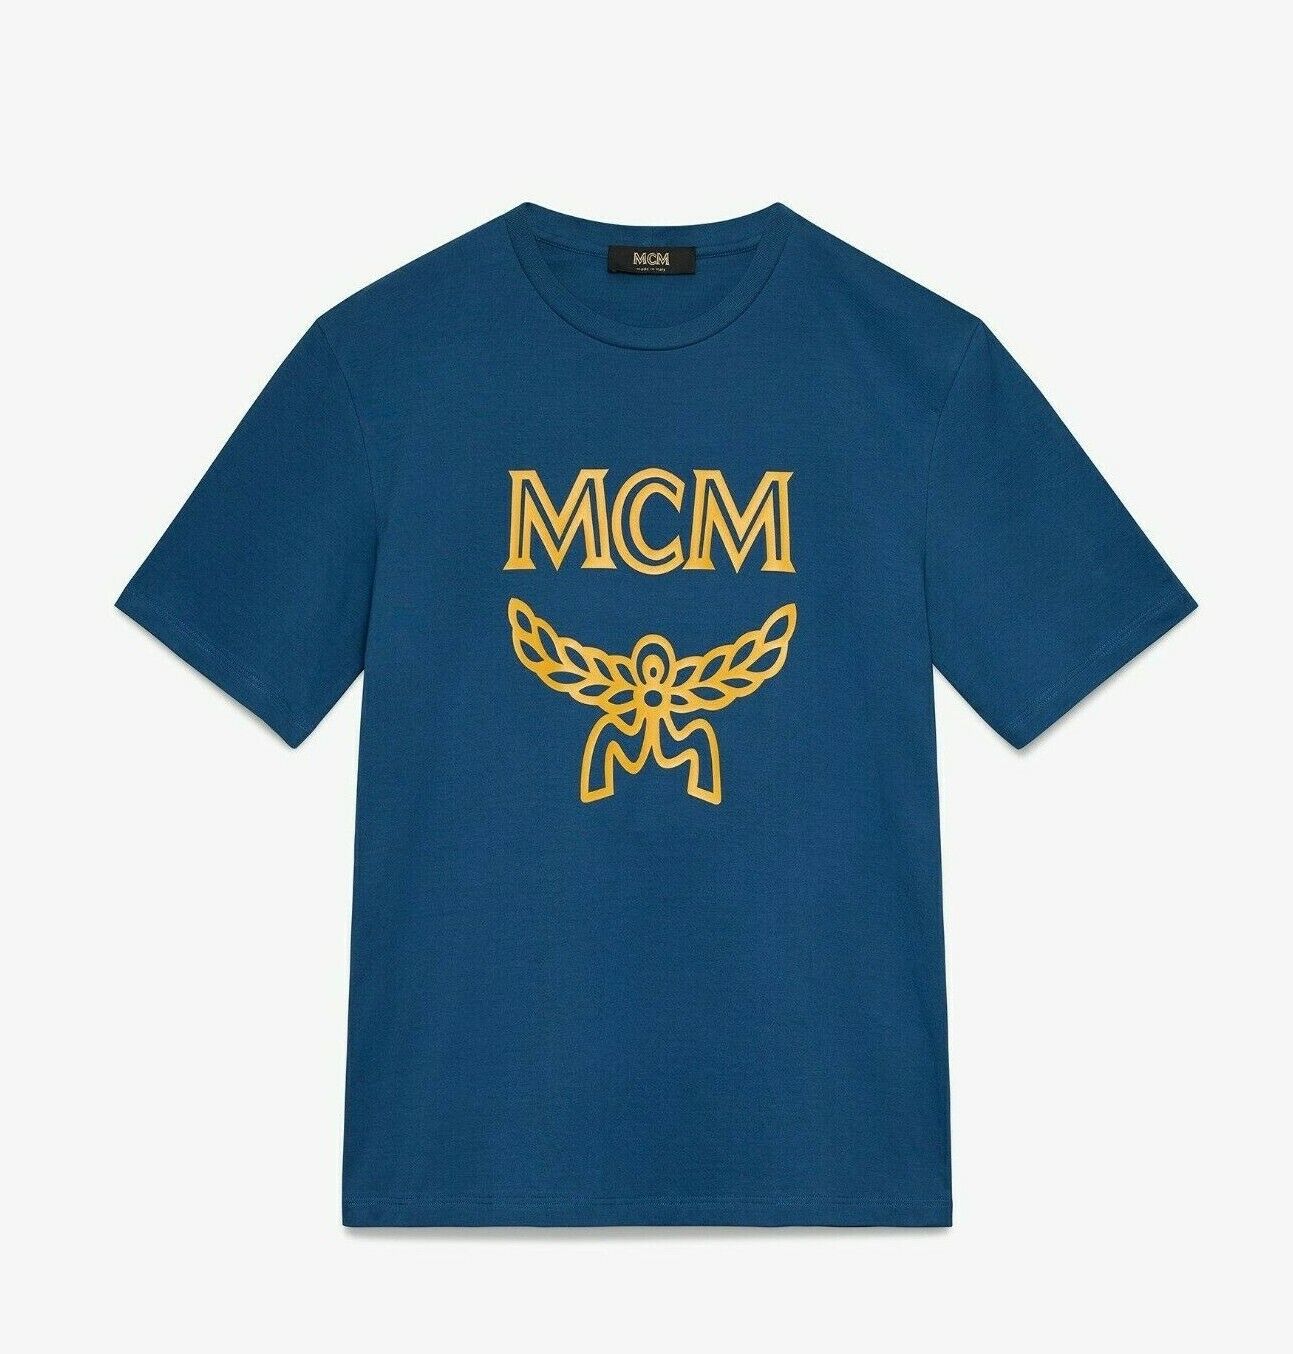 $225 New MCM Men's Blue Cotton Short Sleeve Logo Print T-Shirt MHT9AMM01LG0